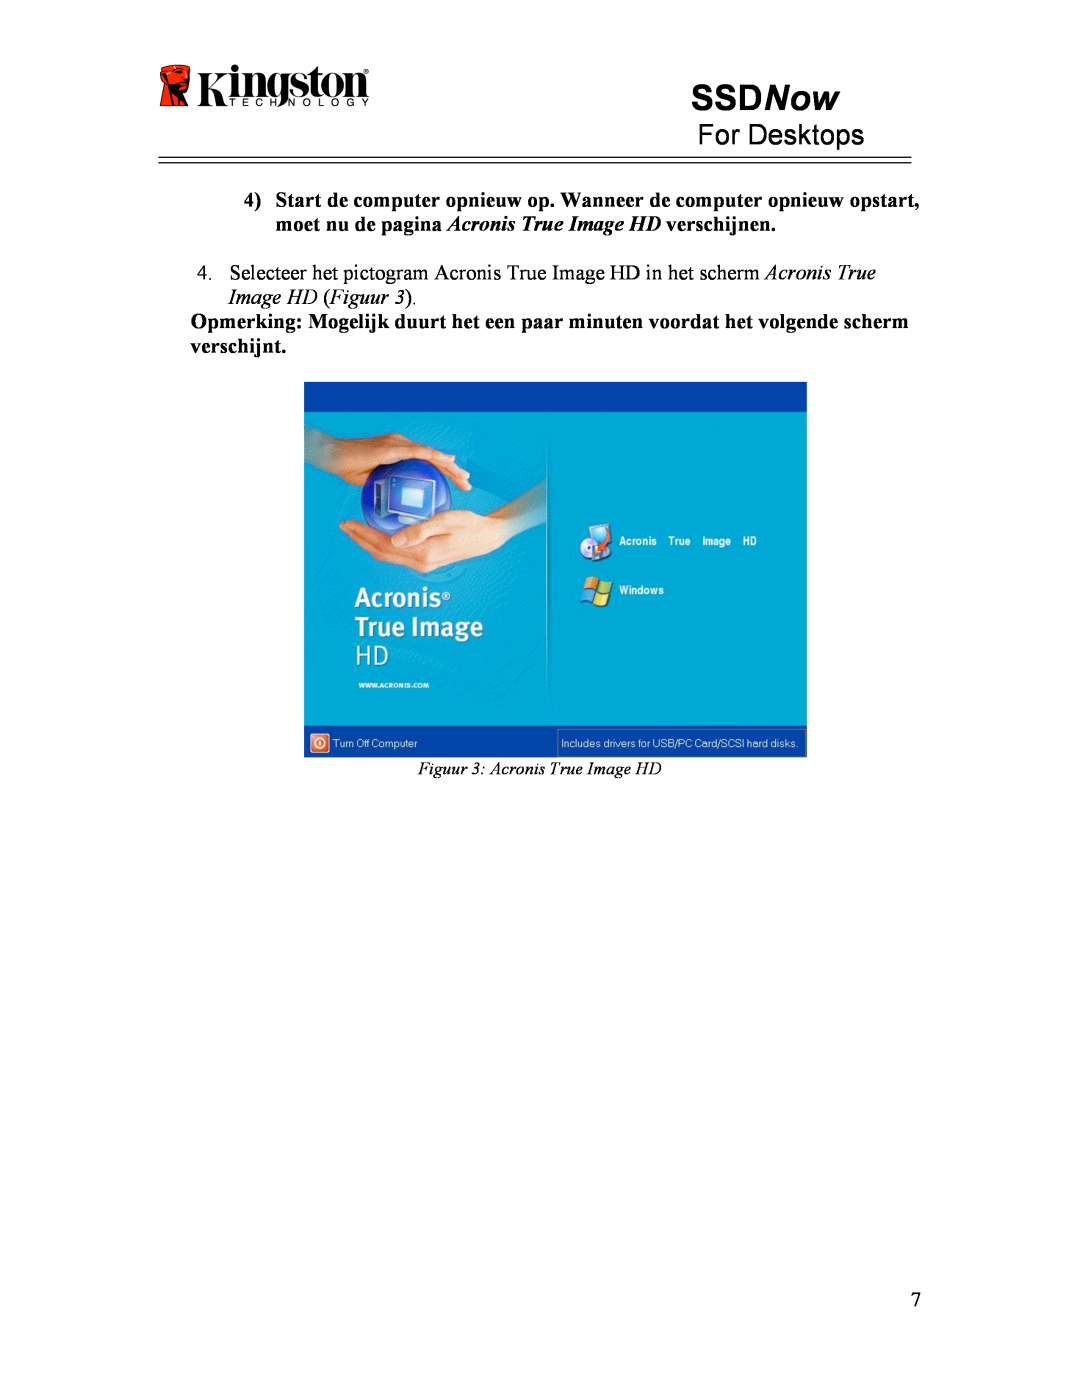 Kingston Technology 07-16-2009 manual SSDNow, For Desktops, Figuur 3 Acronis True Image HD 